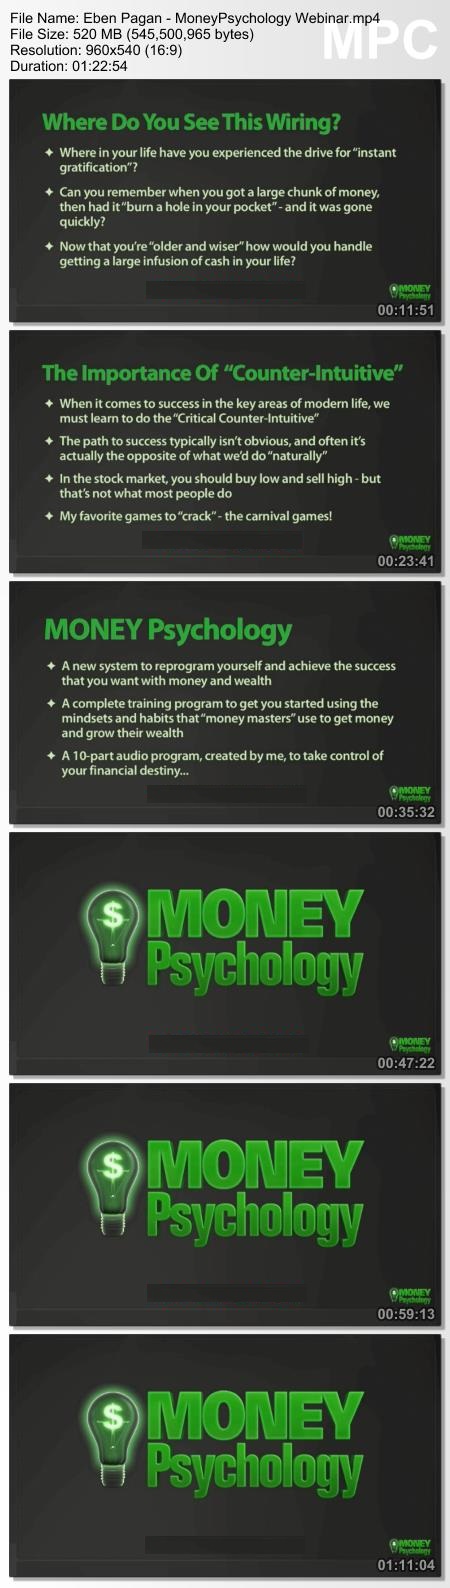 Eben Pagan - Money Psychology & Bonus